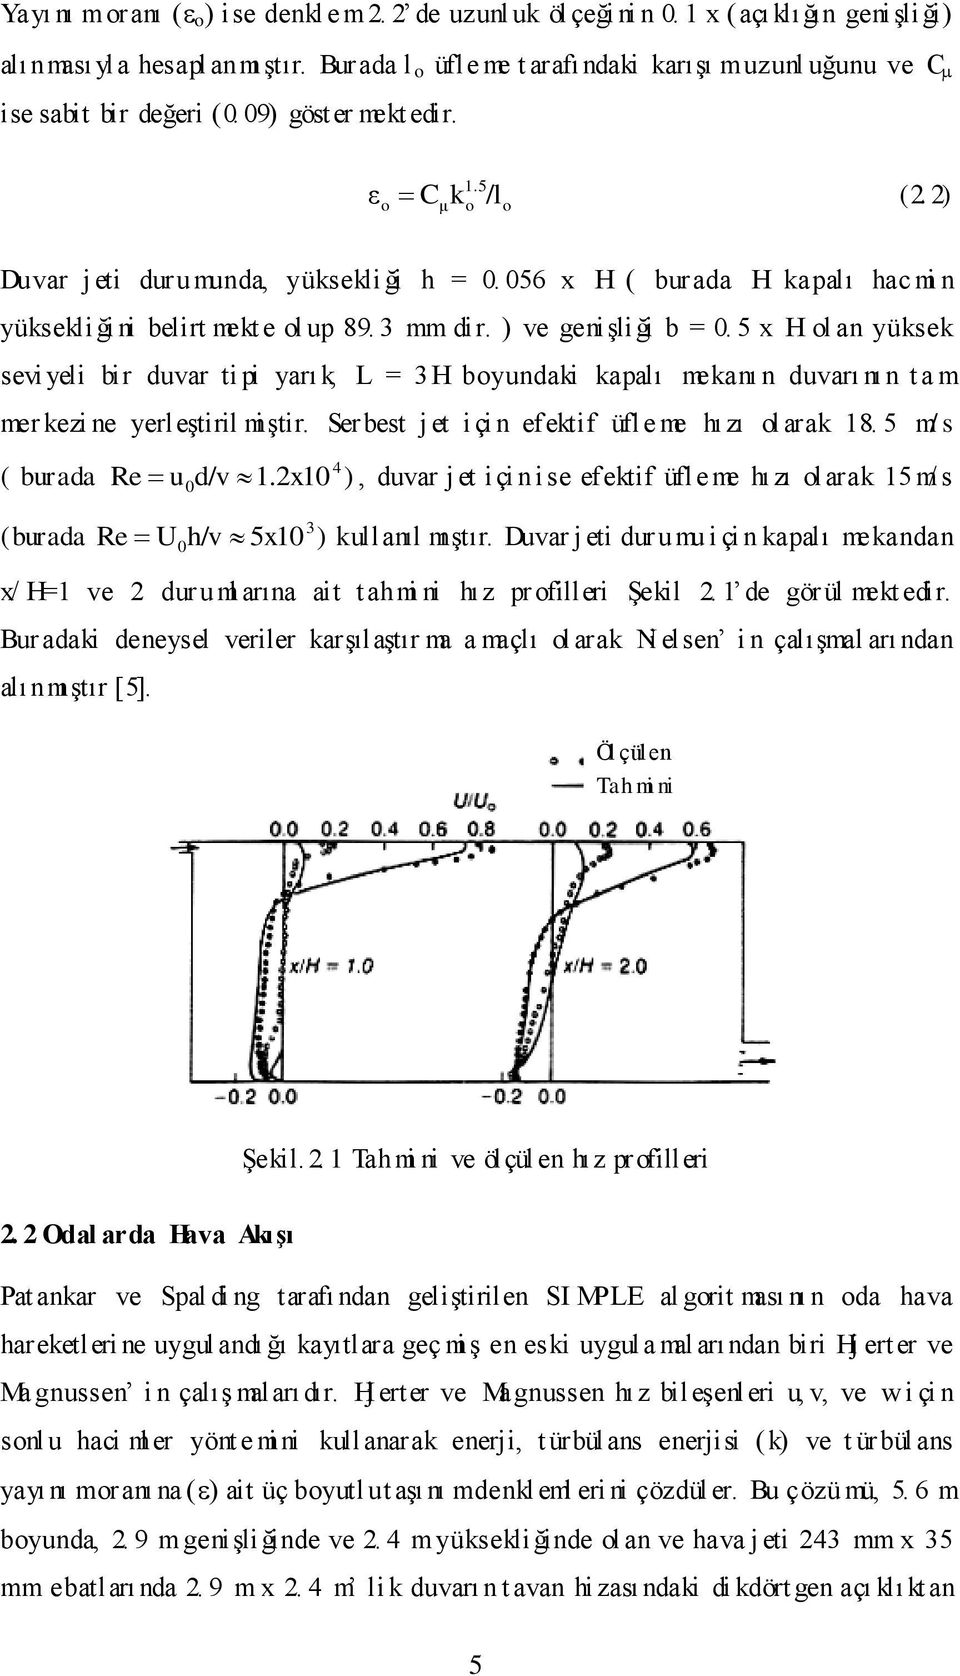 056 H ( burada H kapalı hac mi n yüksekli ği ni belirt mekt e l up 89. 3 mm dir. ) ve genişliği b = 0.